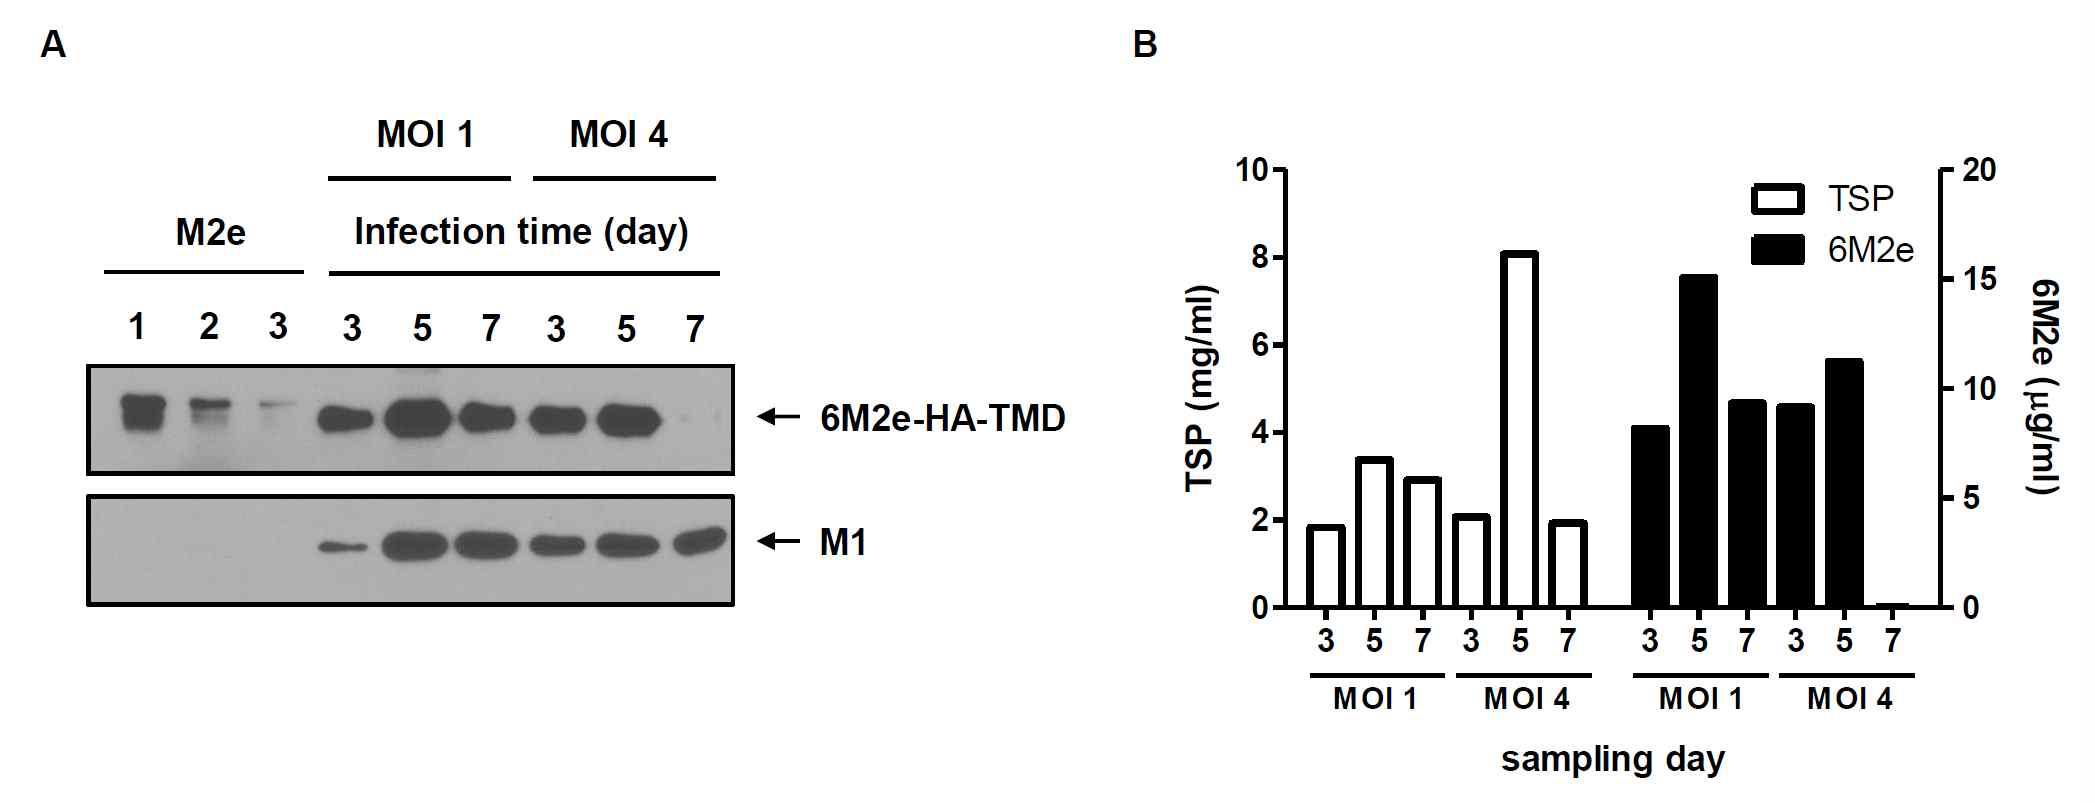 Spinner flask에서 재조합 배큘로바이러스 (rBac/M1, rBac/6M2e-HA-TMD)의 감염 량 (MOI) 및 TN-5B1-4 세포의 배양기간에 따른 범용백신용 VLP 생산을 비교 함.